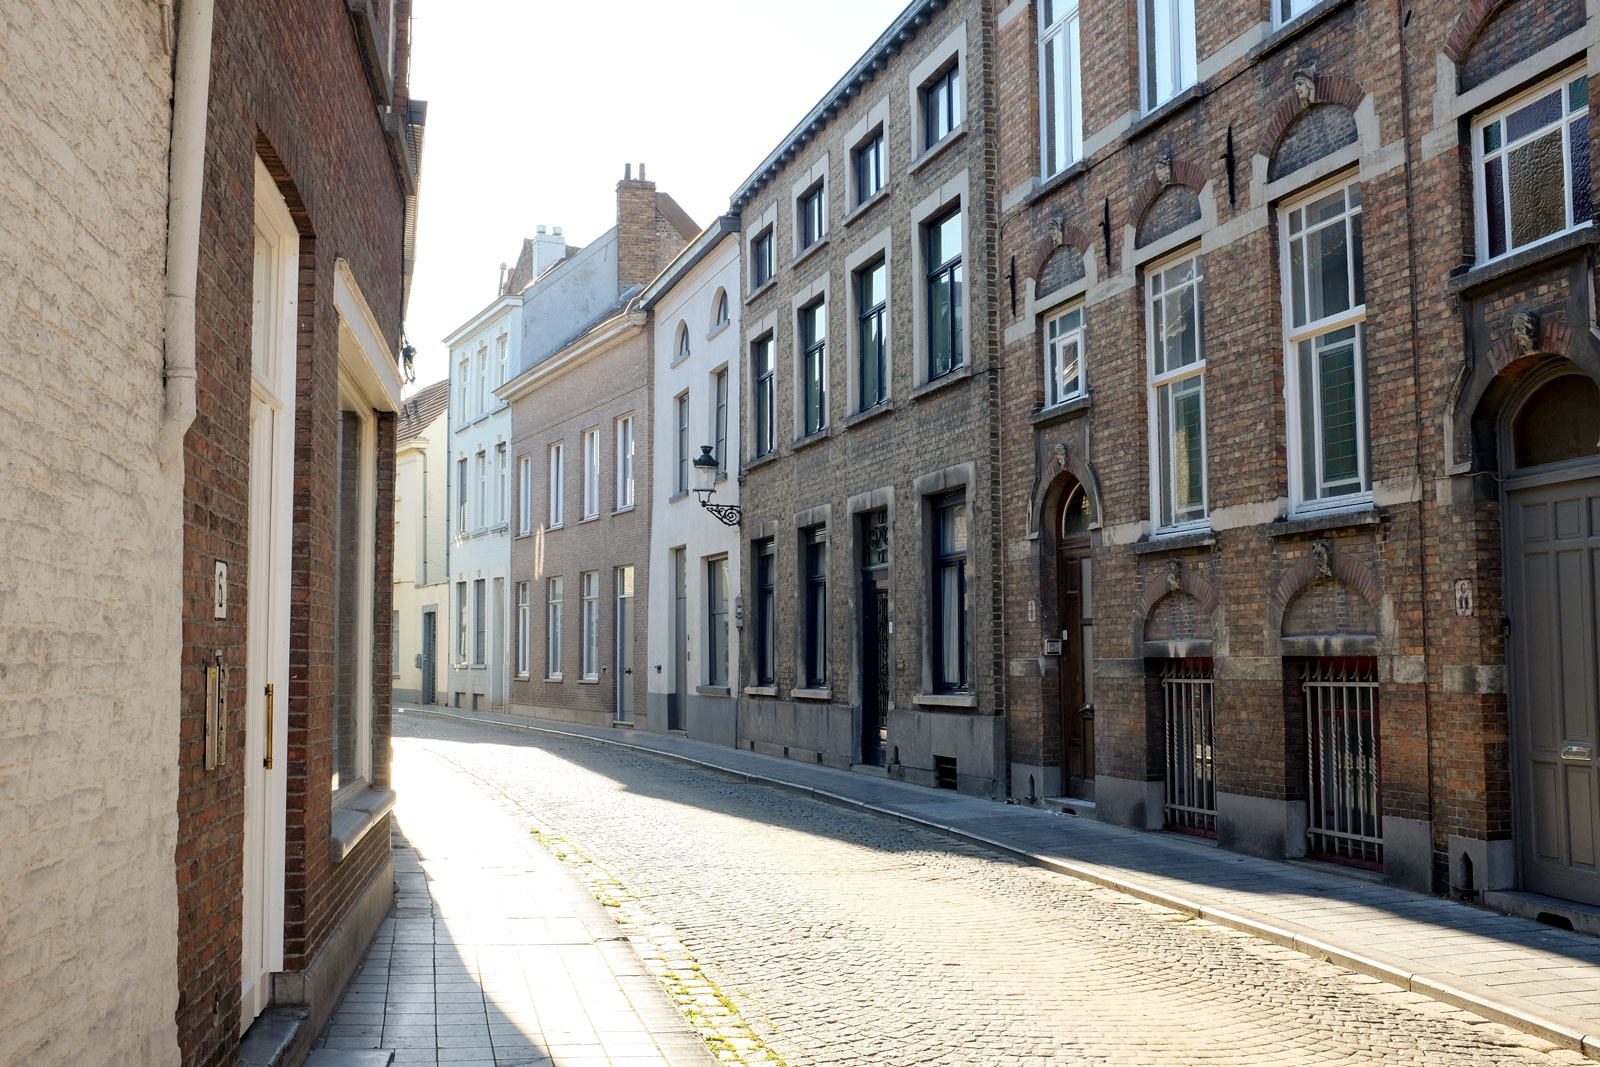 A charming alleyway in Bruges